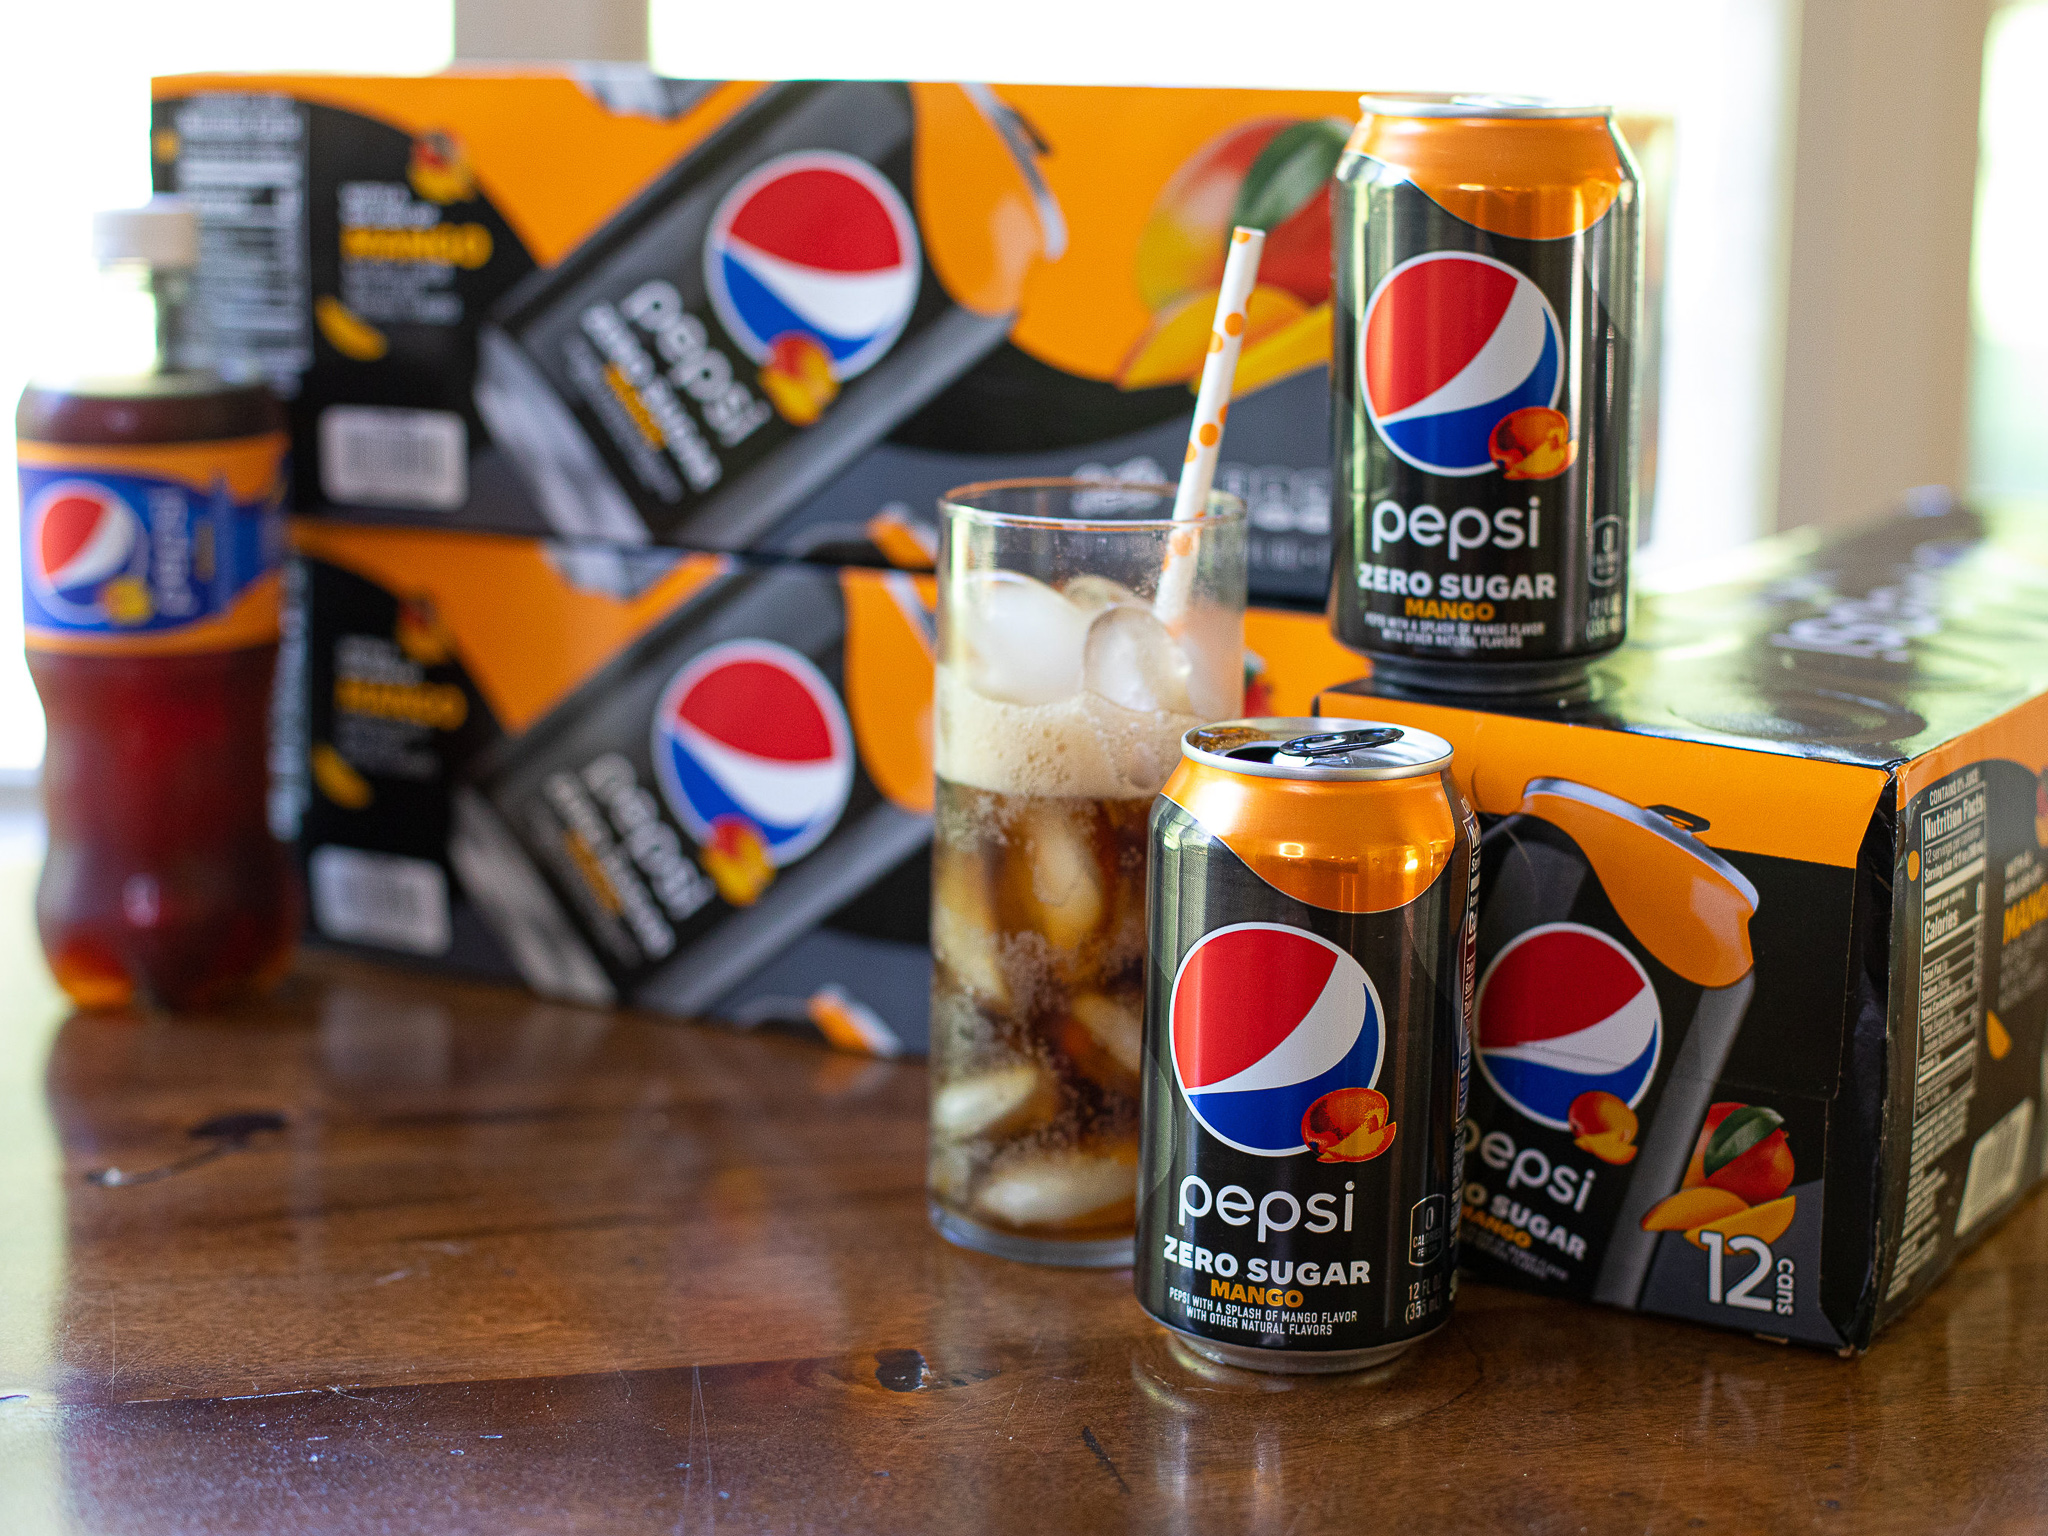 Pepsi Zero Sugar 12-Packs As Low As $2.10 At Publix – Plus Cheap Pepsi Soda Shop